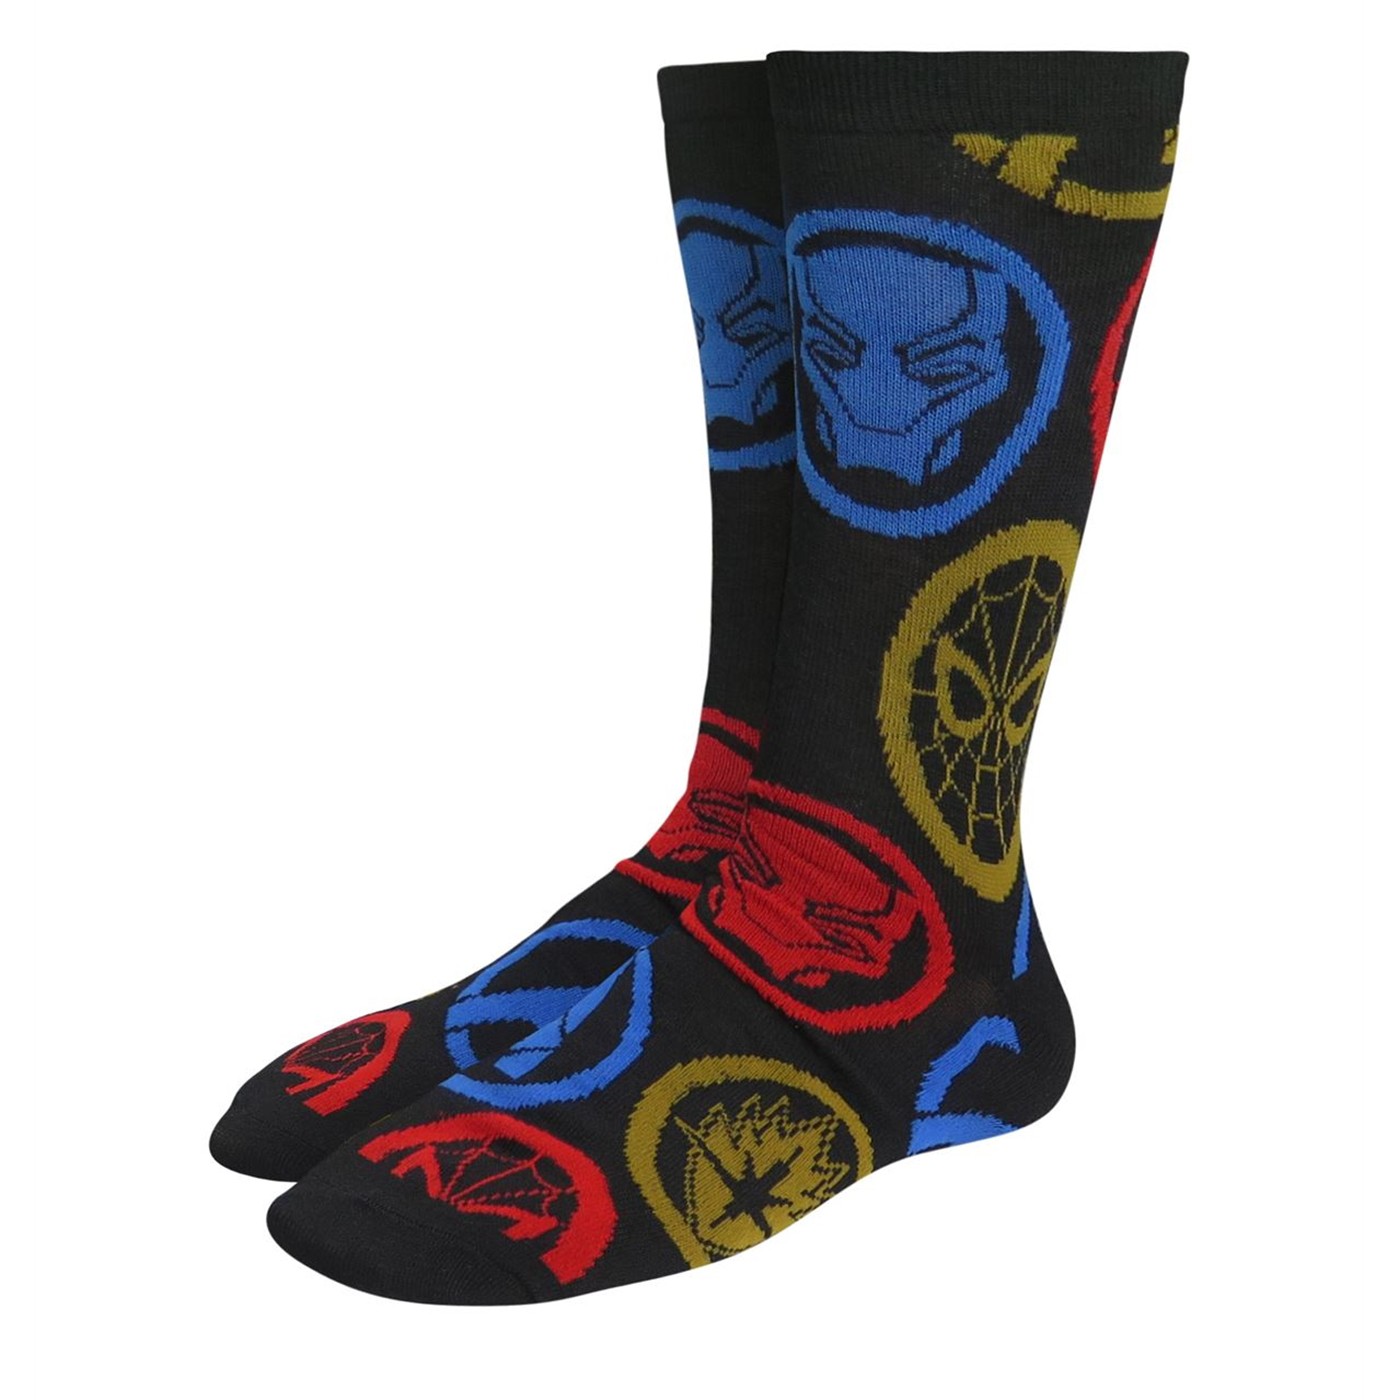 Infinity War Spider-Man Logos Crew Socks 2-Pack